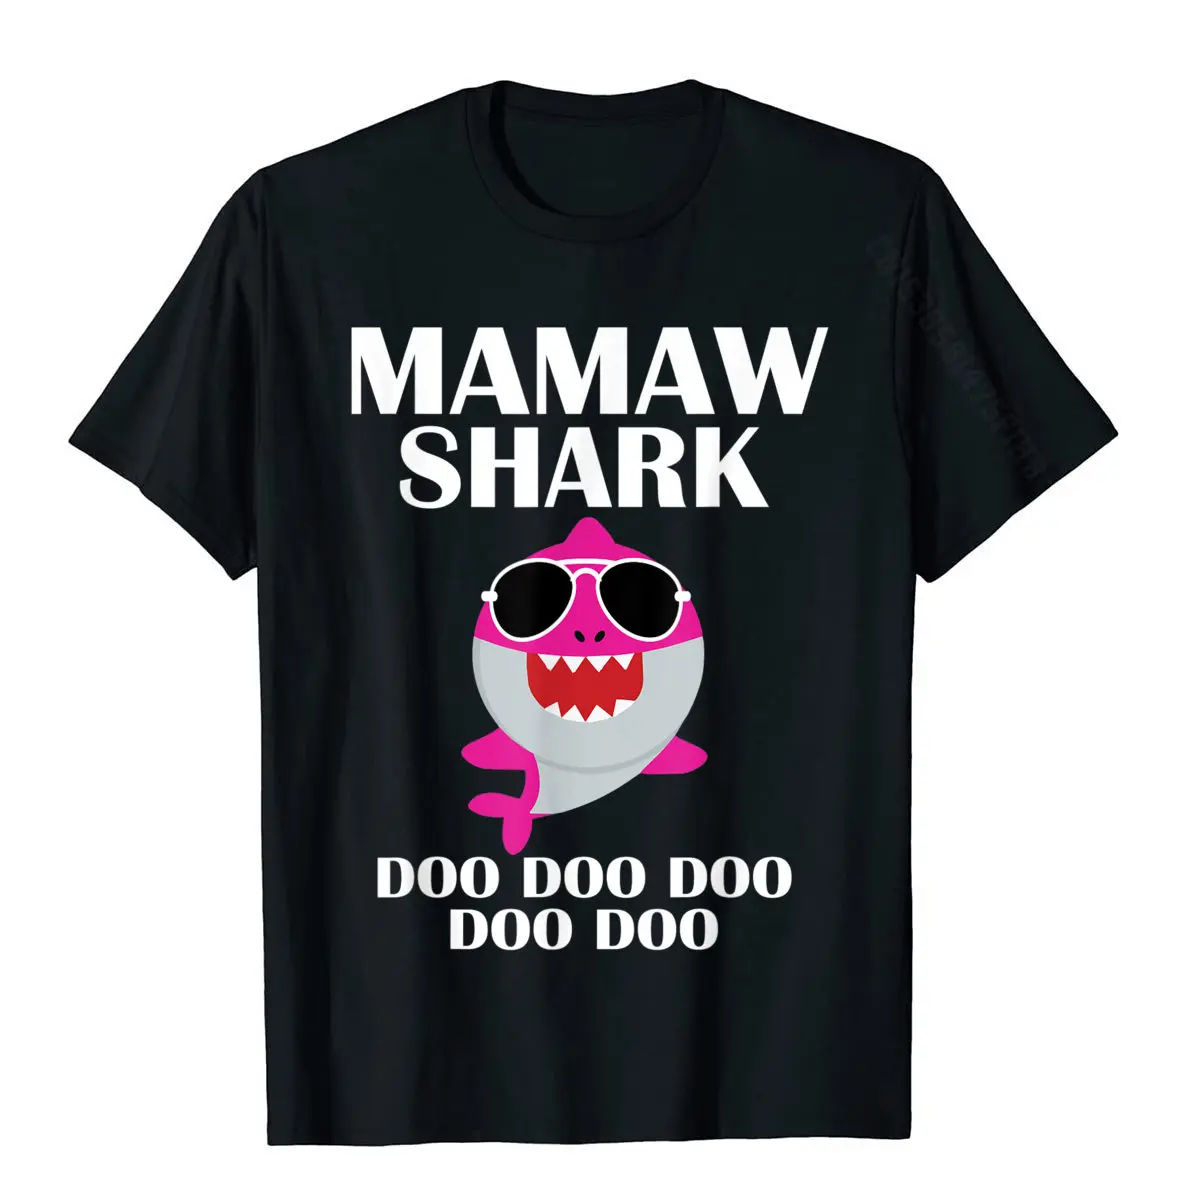 Mamaw Shark Doo Doo Shirt Funny Mothers Day Mamaw Christmas T-Shirt Fashion Leisure T Shirts Cotton Tops Shirts For Men